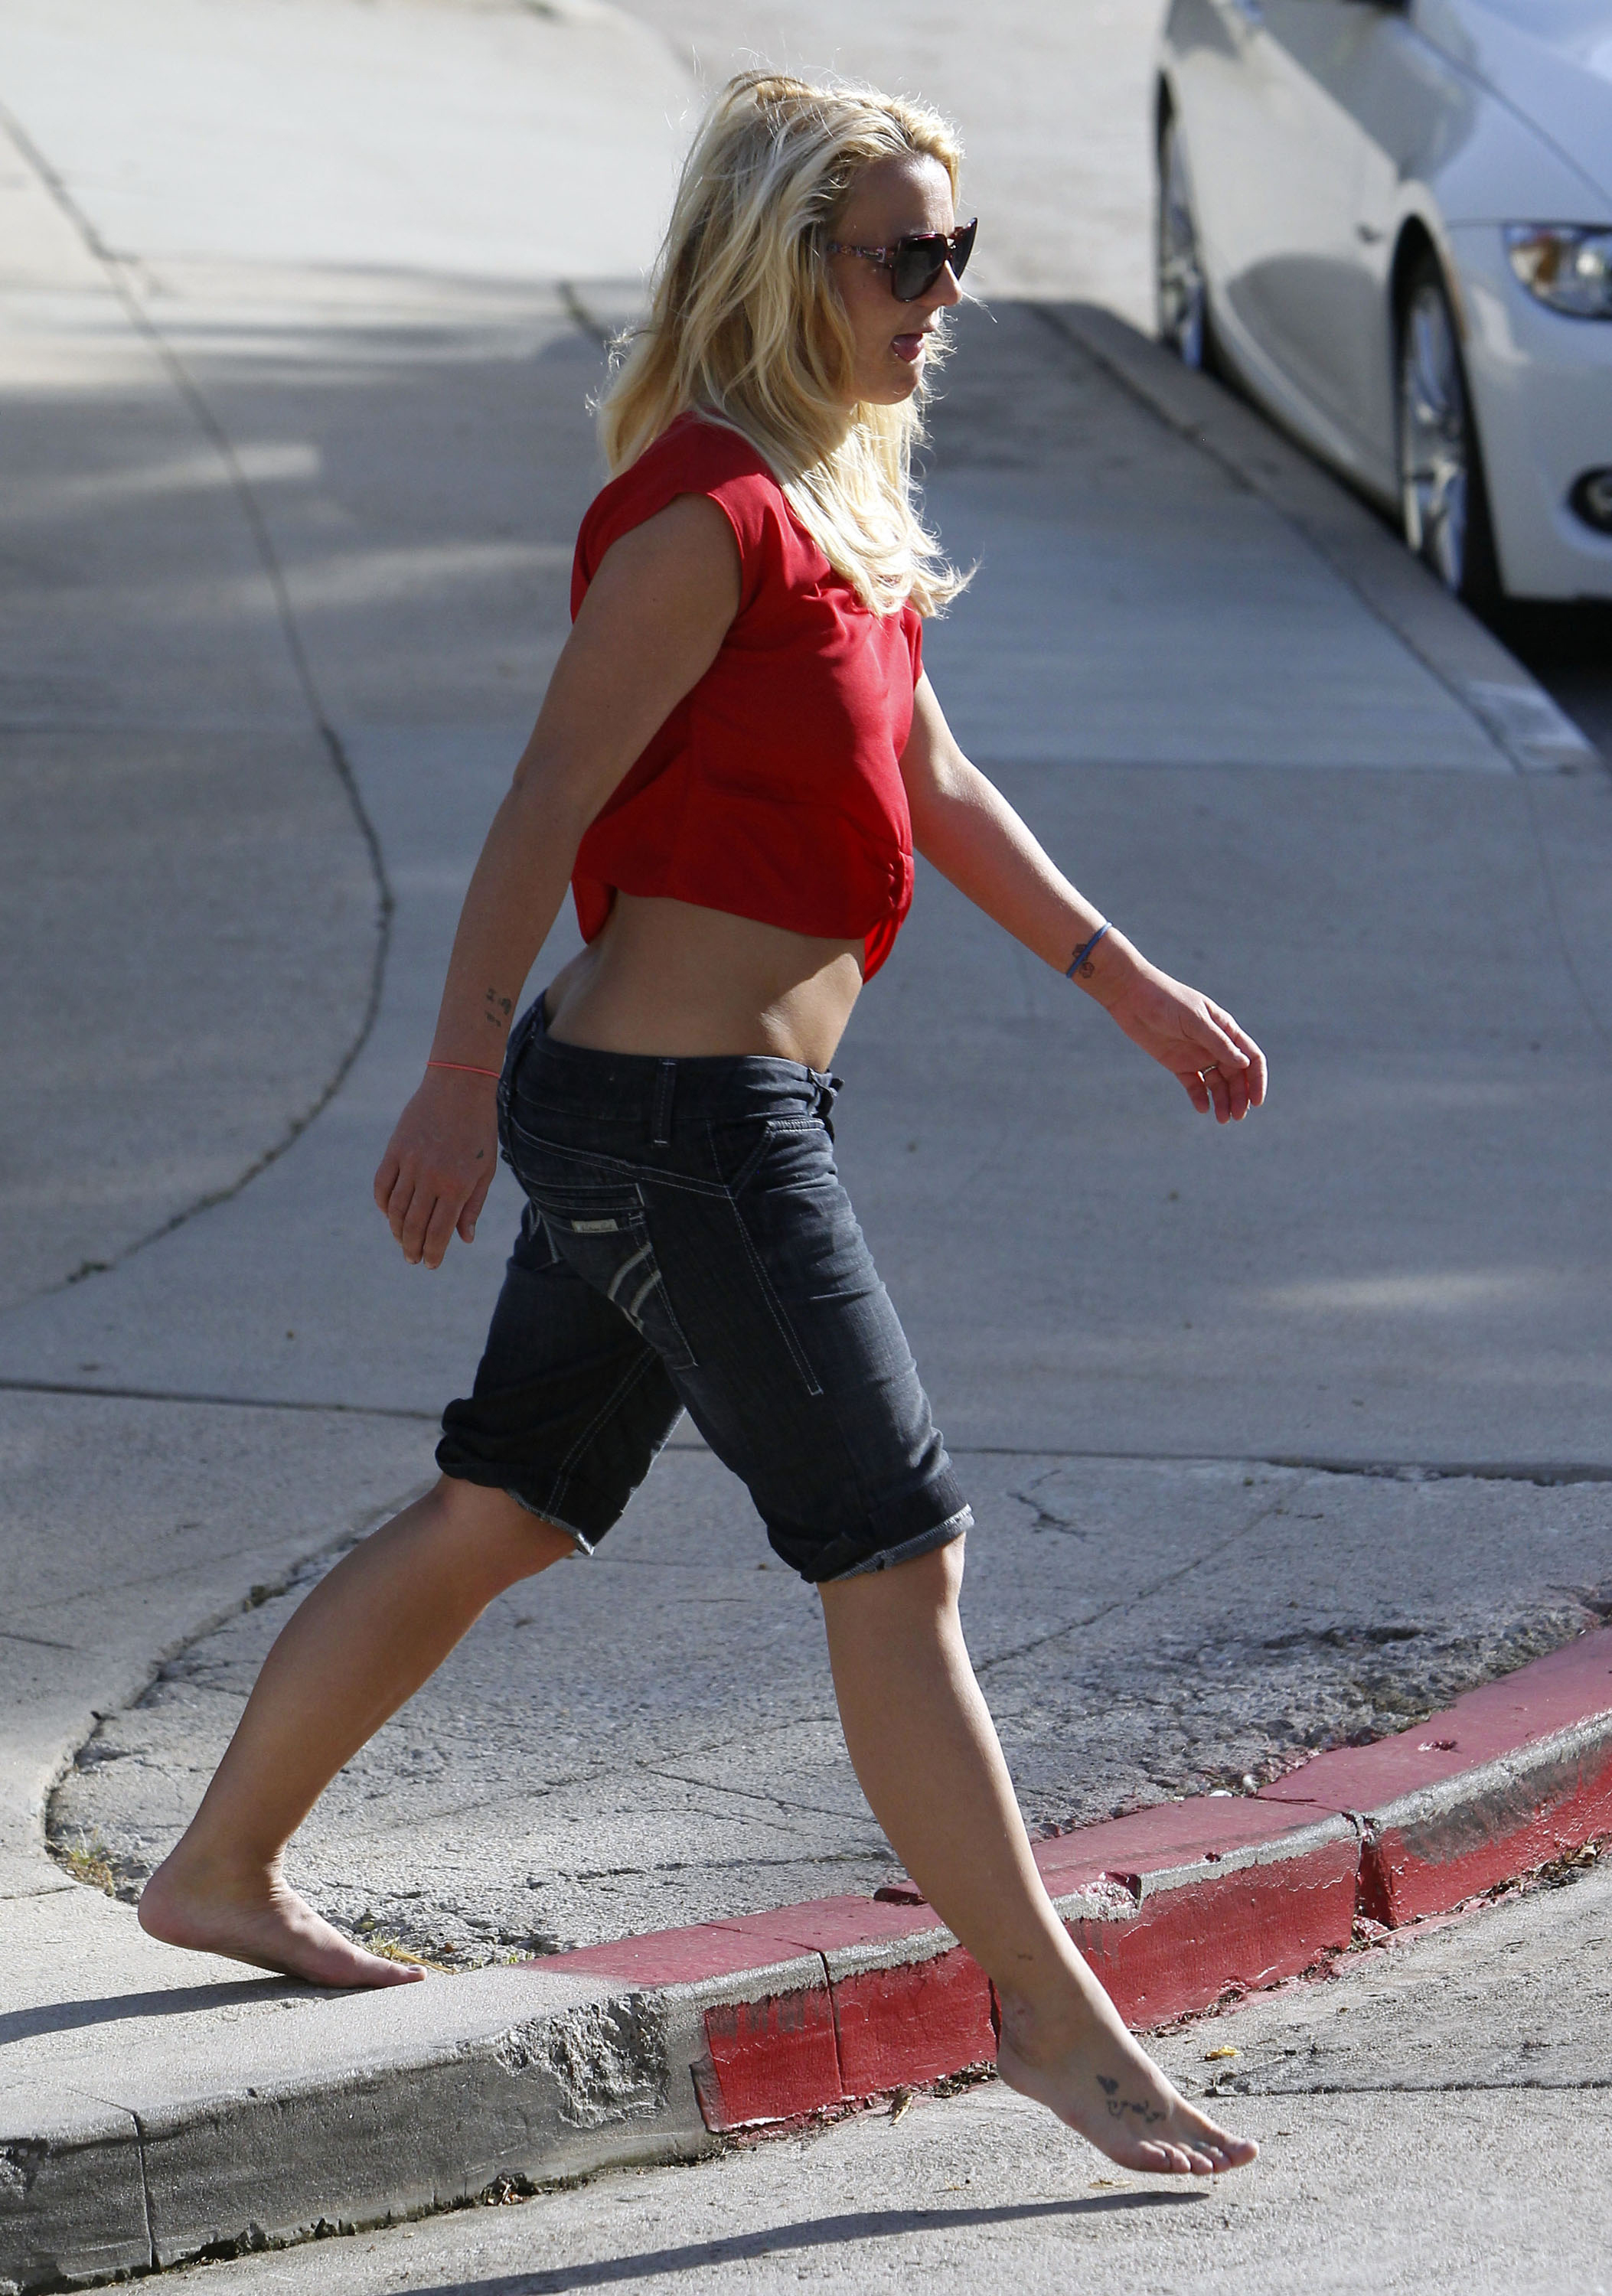 https://pics.wikifeet.com/Britney-Spears-Feet-3126592.jpg